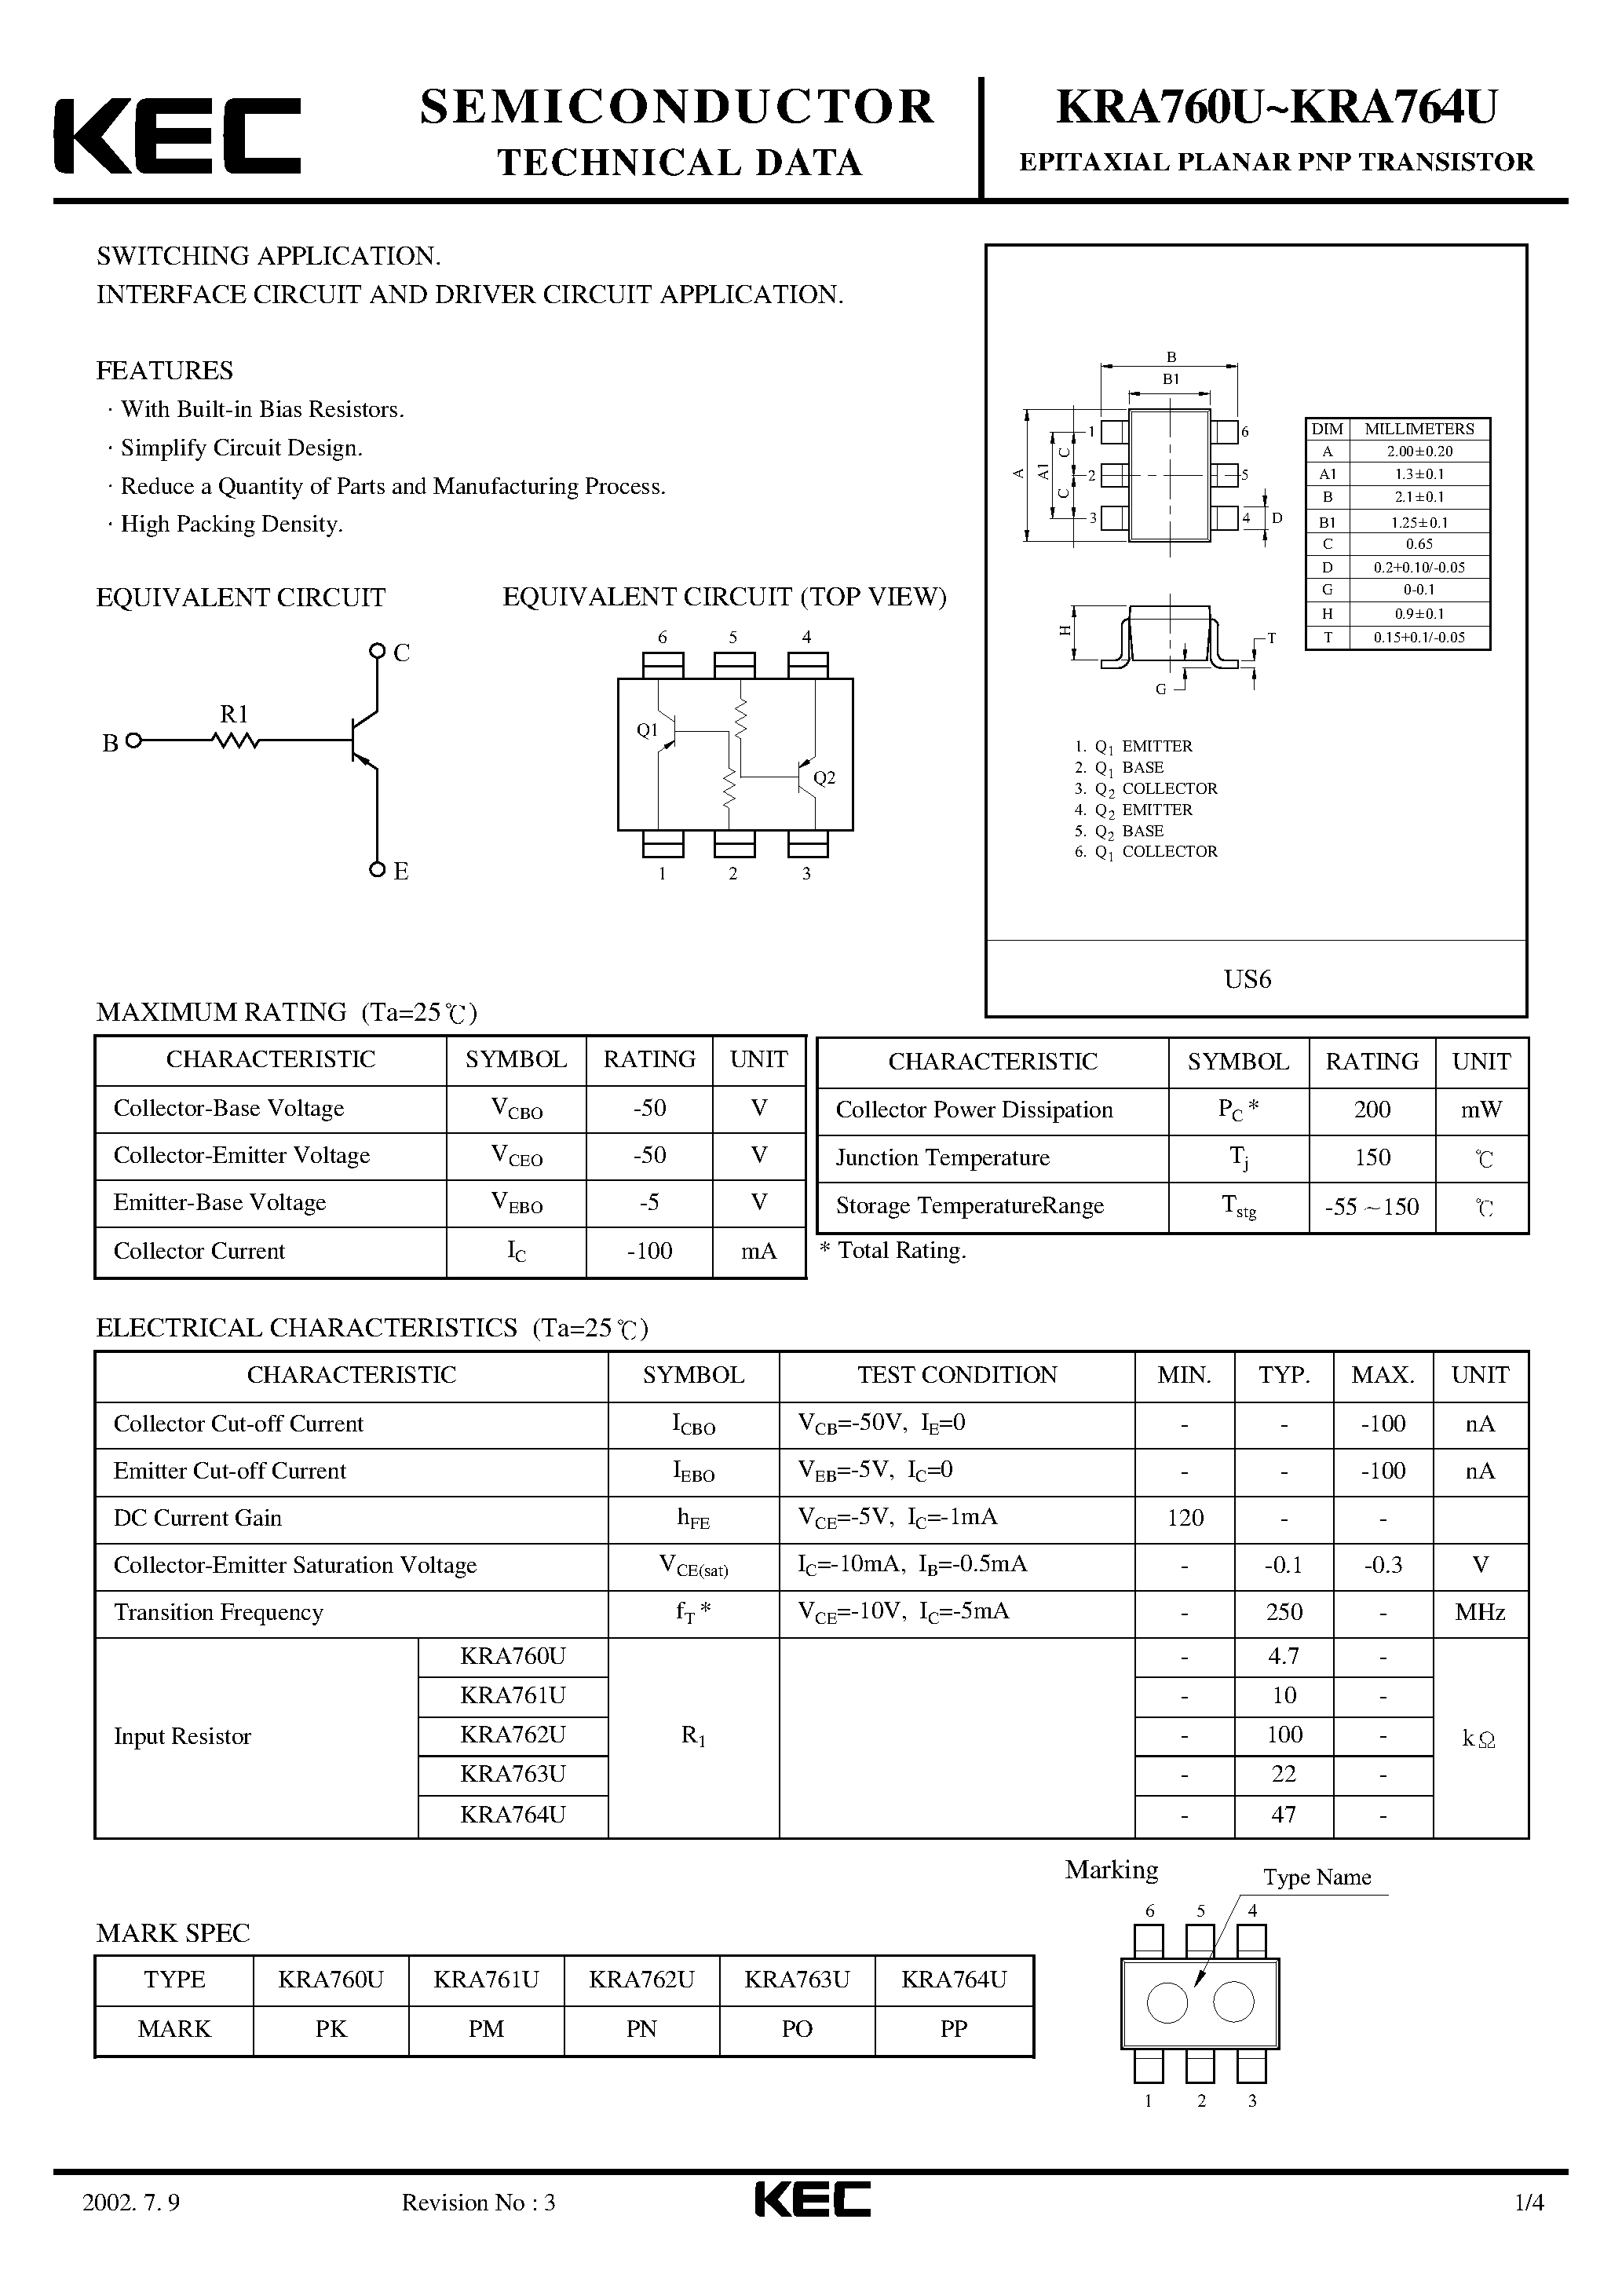 Datasheet KRA760U - (KRA760U - KRA764U) EPITAXIAL PLANAR PNP TRANSISTOR page 1